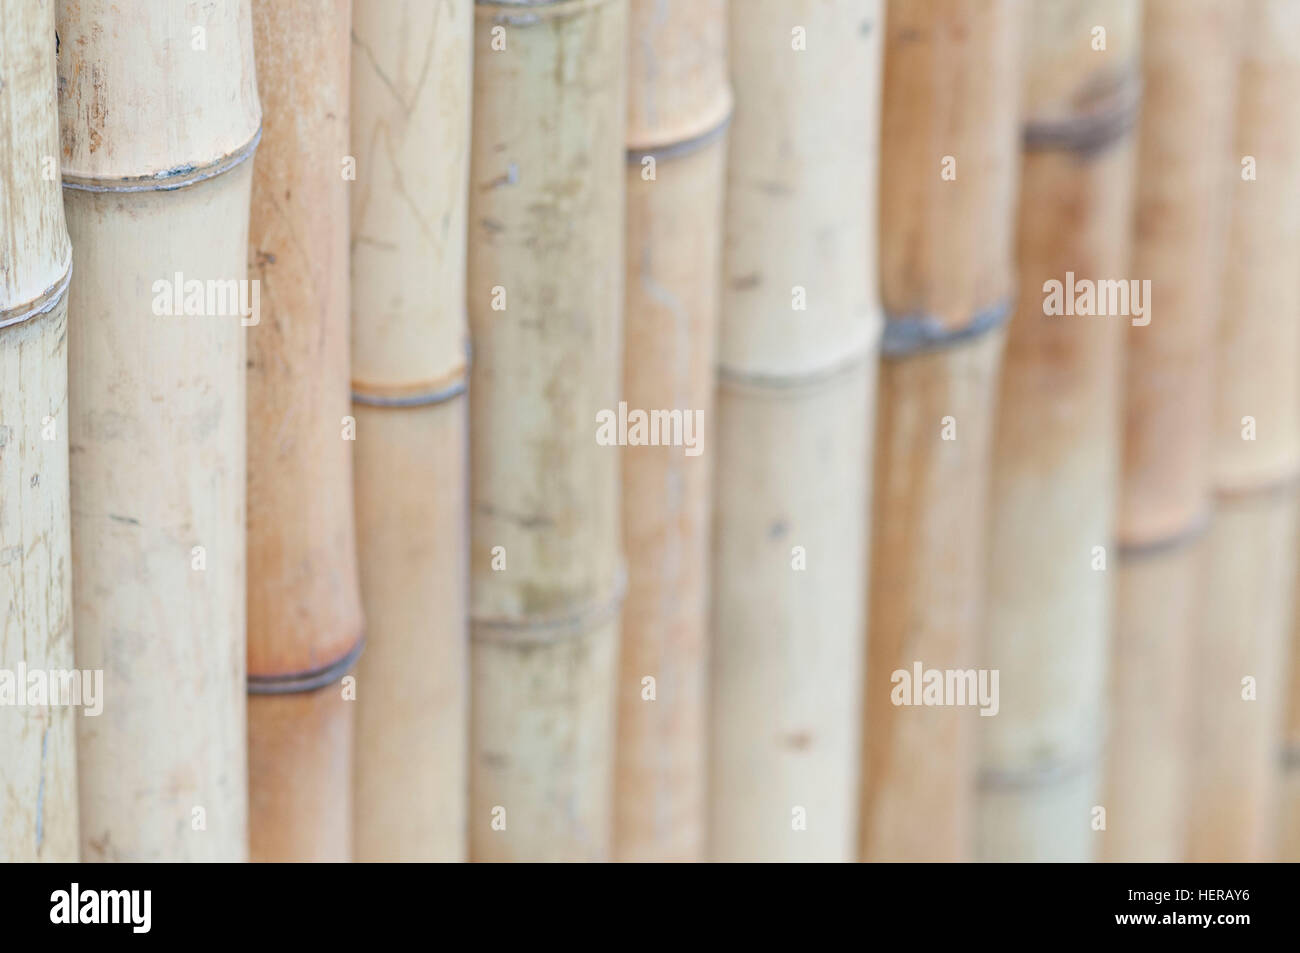 Wall made of bamboo Stock Photo